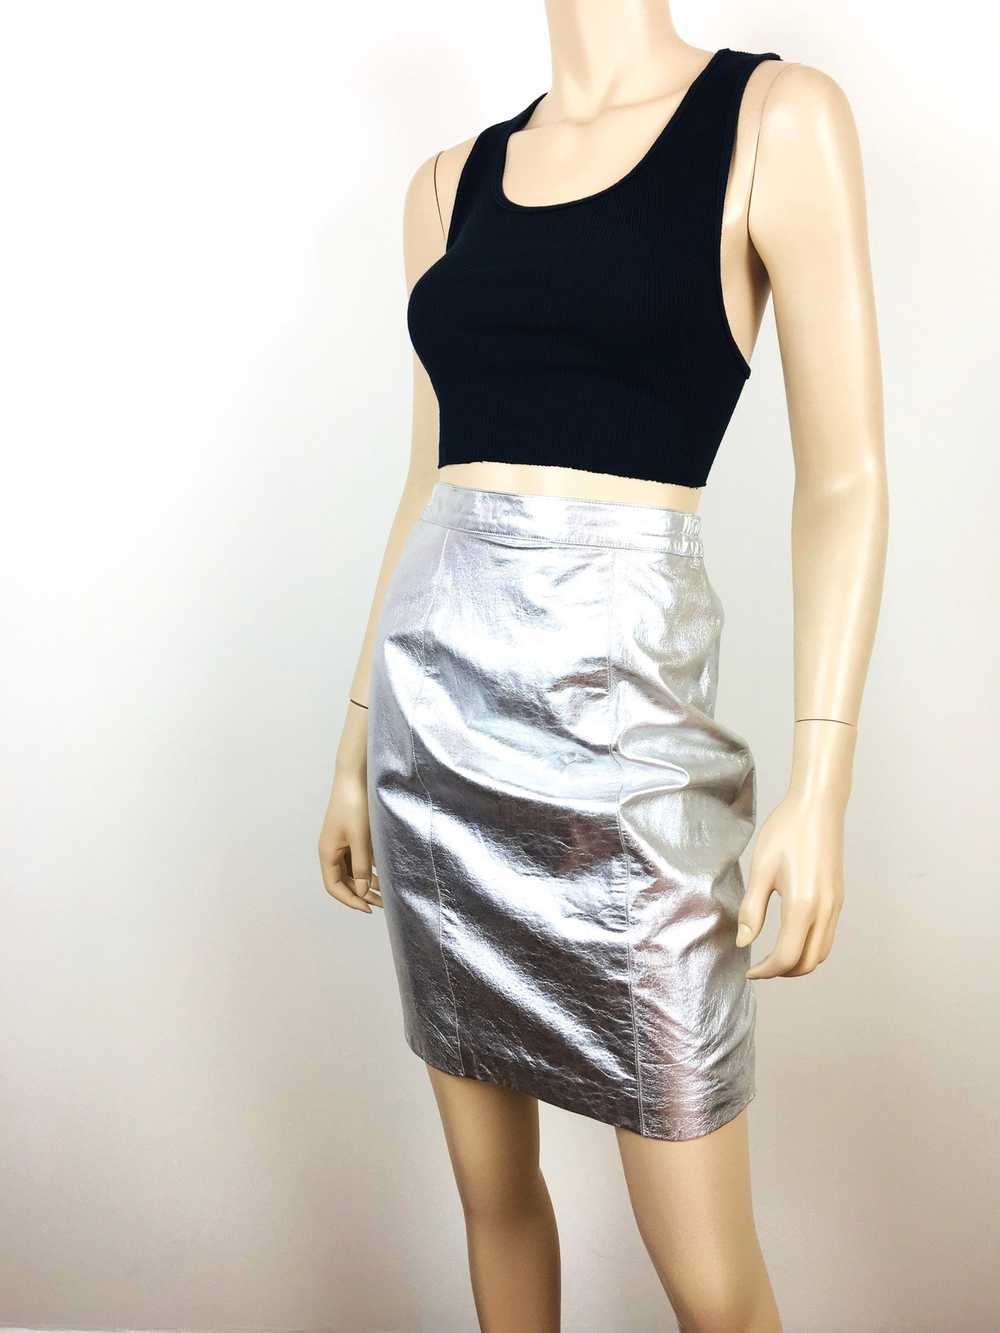 Vintage 1980s Silver Metallic Lame Leather Skirt - image 3